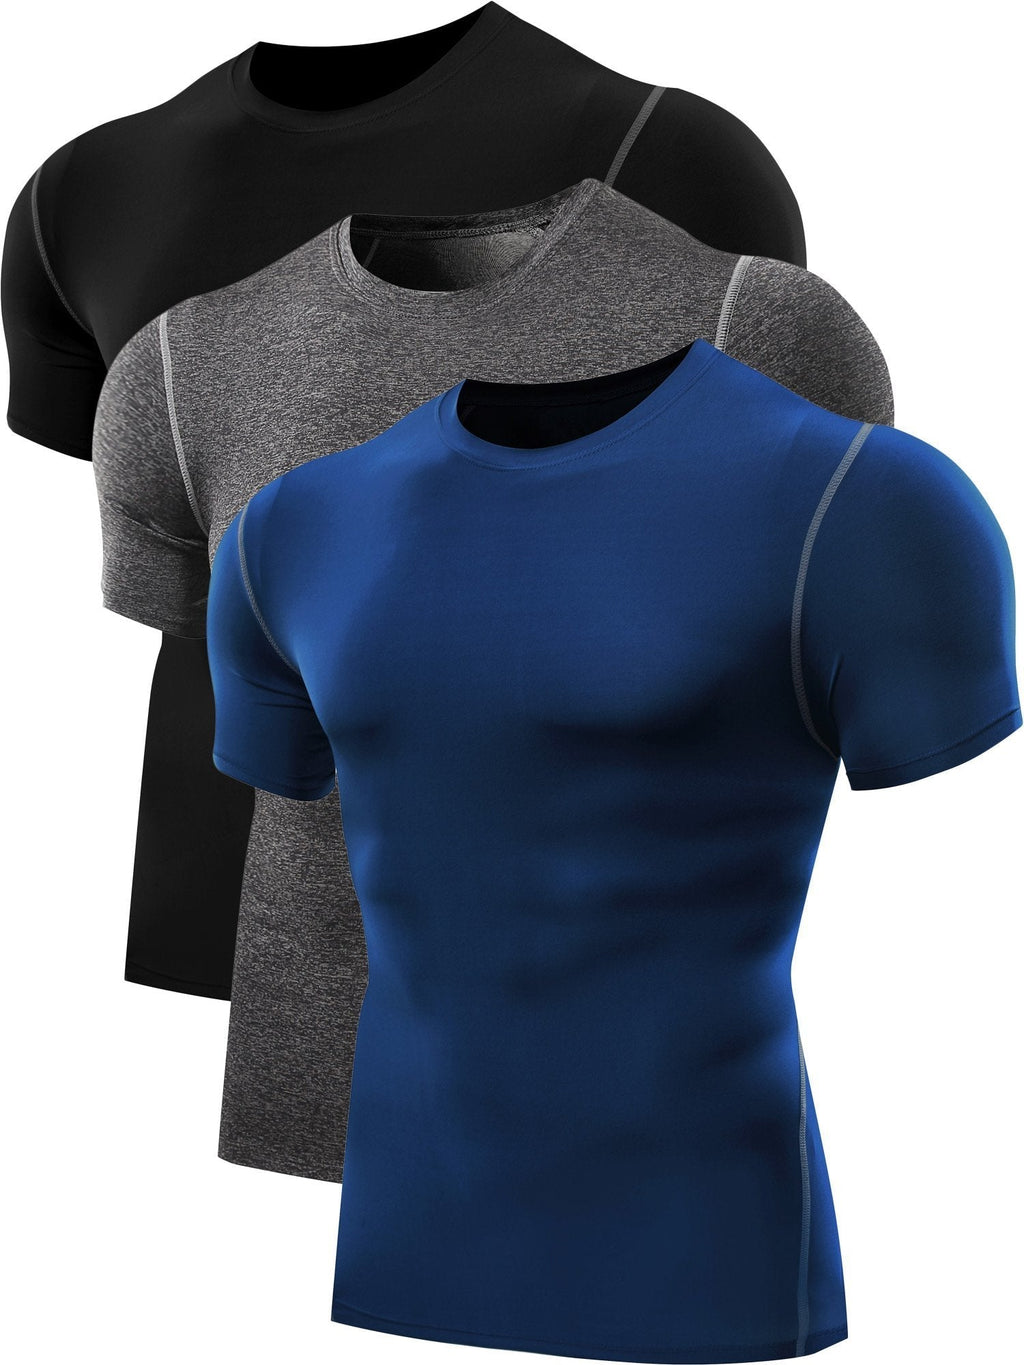 Neleus Men's 3 Pack Athletic Compression Under Base Layer Sport Shirt Small 5003# Black,grey,blue,3 Pack - BeesActive Australia